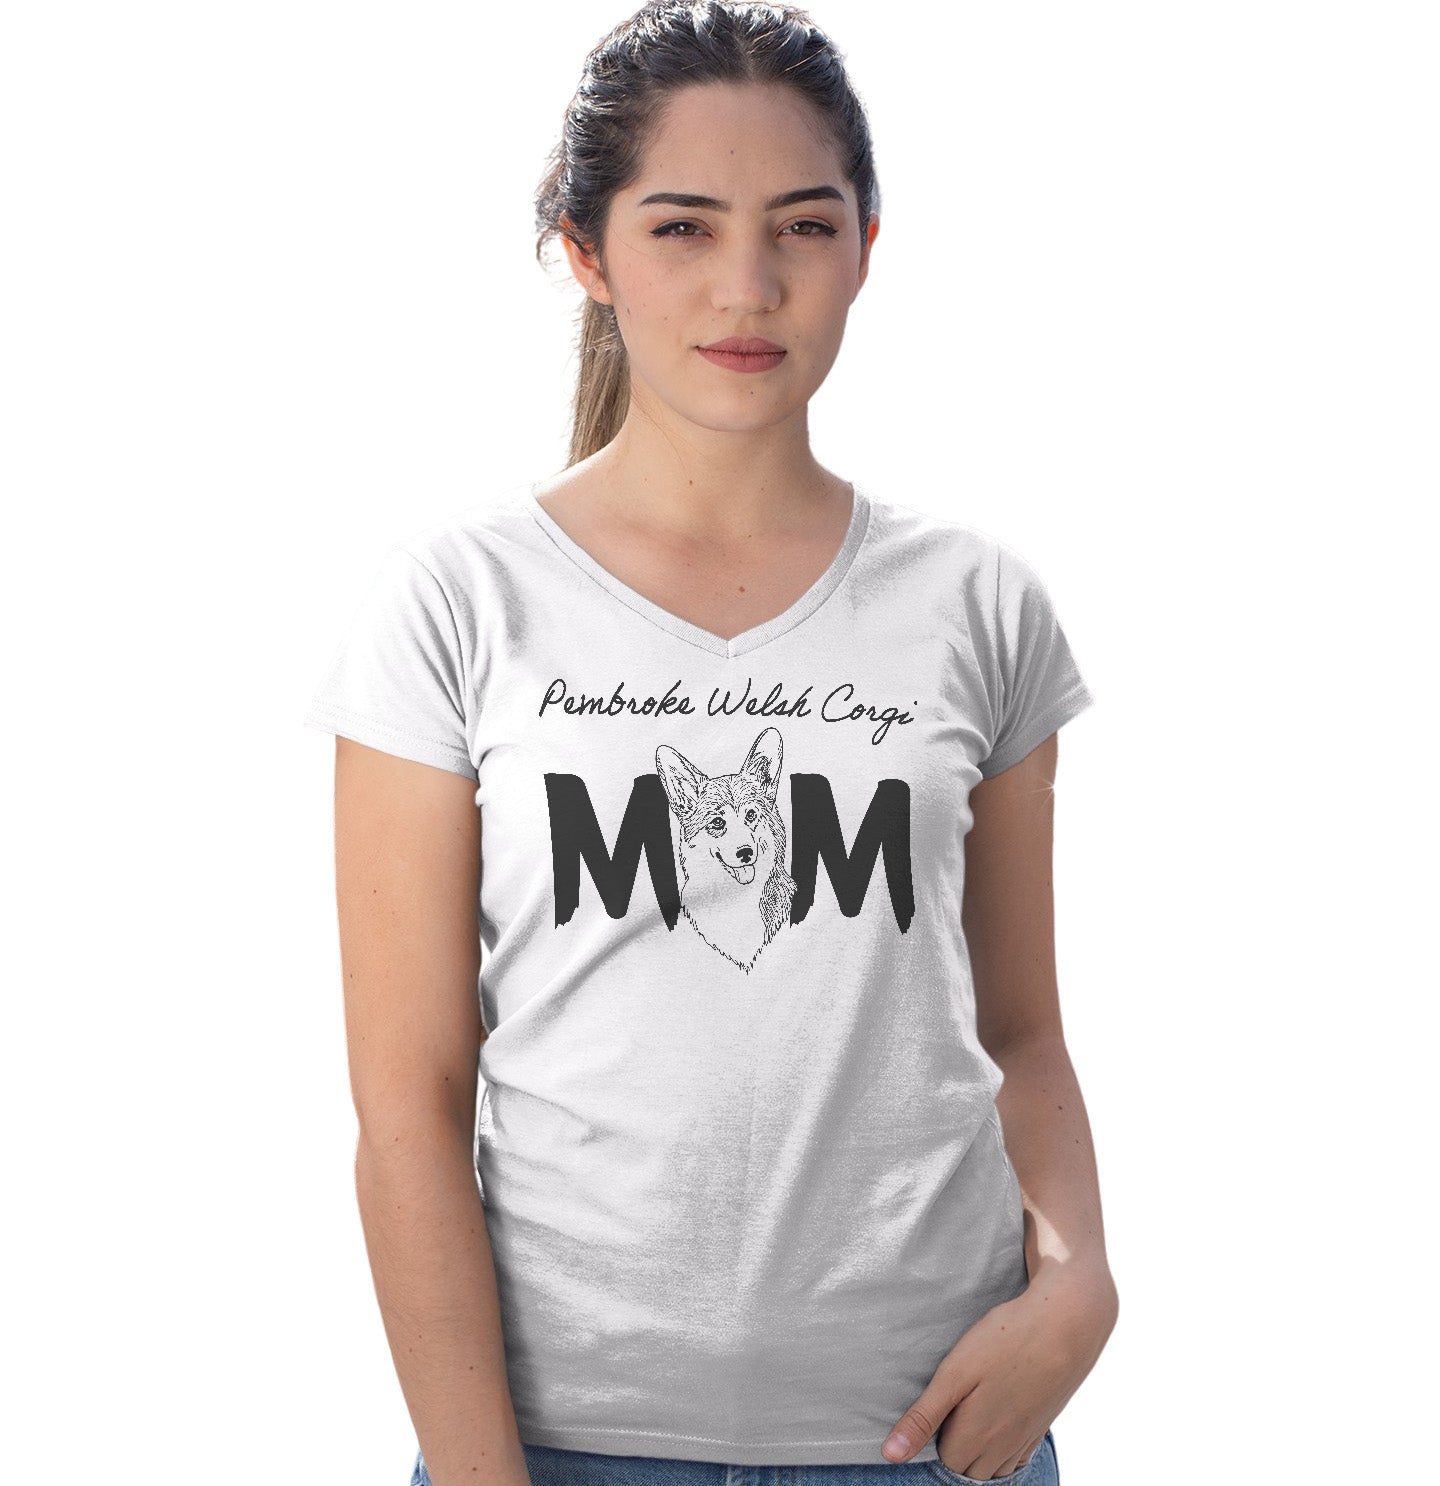 Pembroke Welsh Corgi Breed Mom - Women's V-Neck T-Shirt